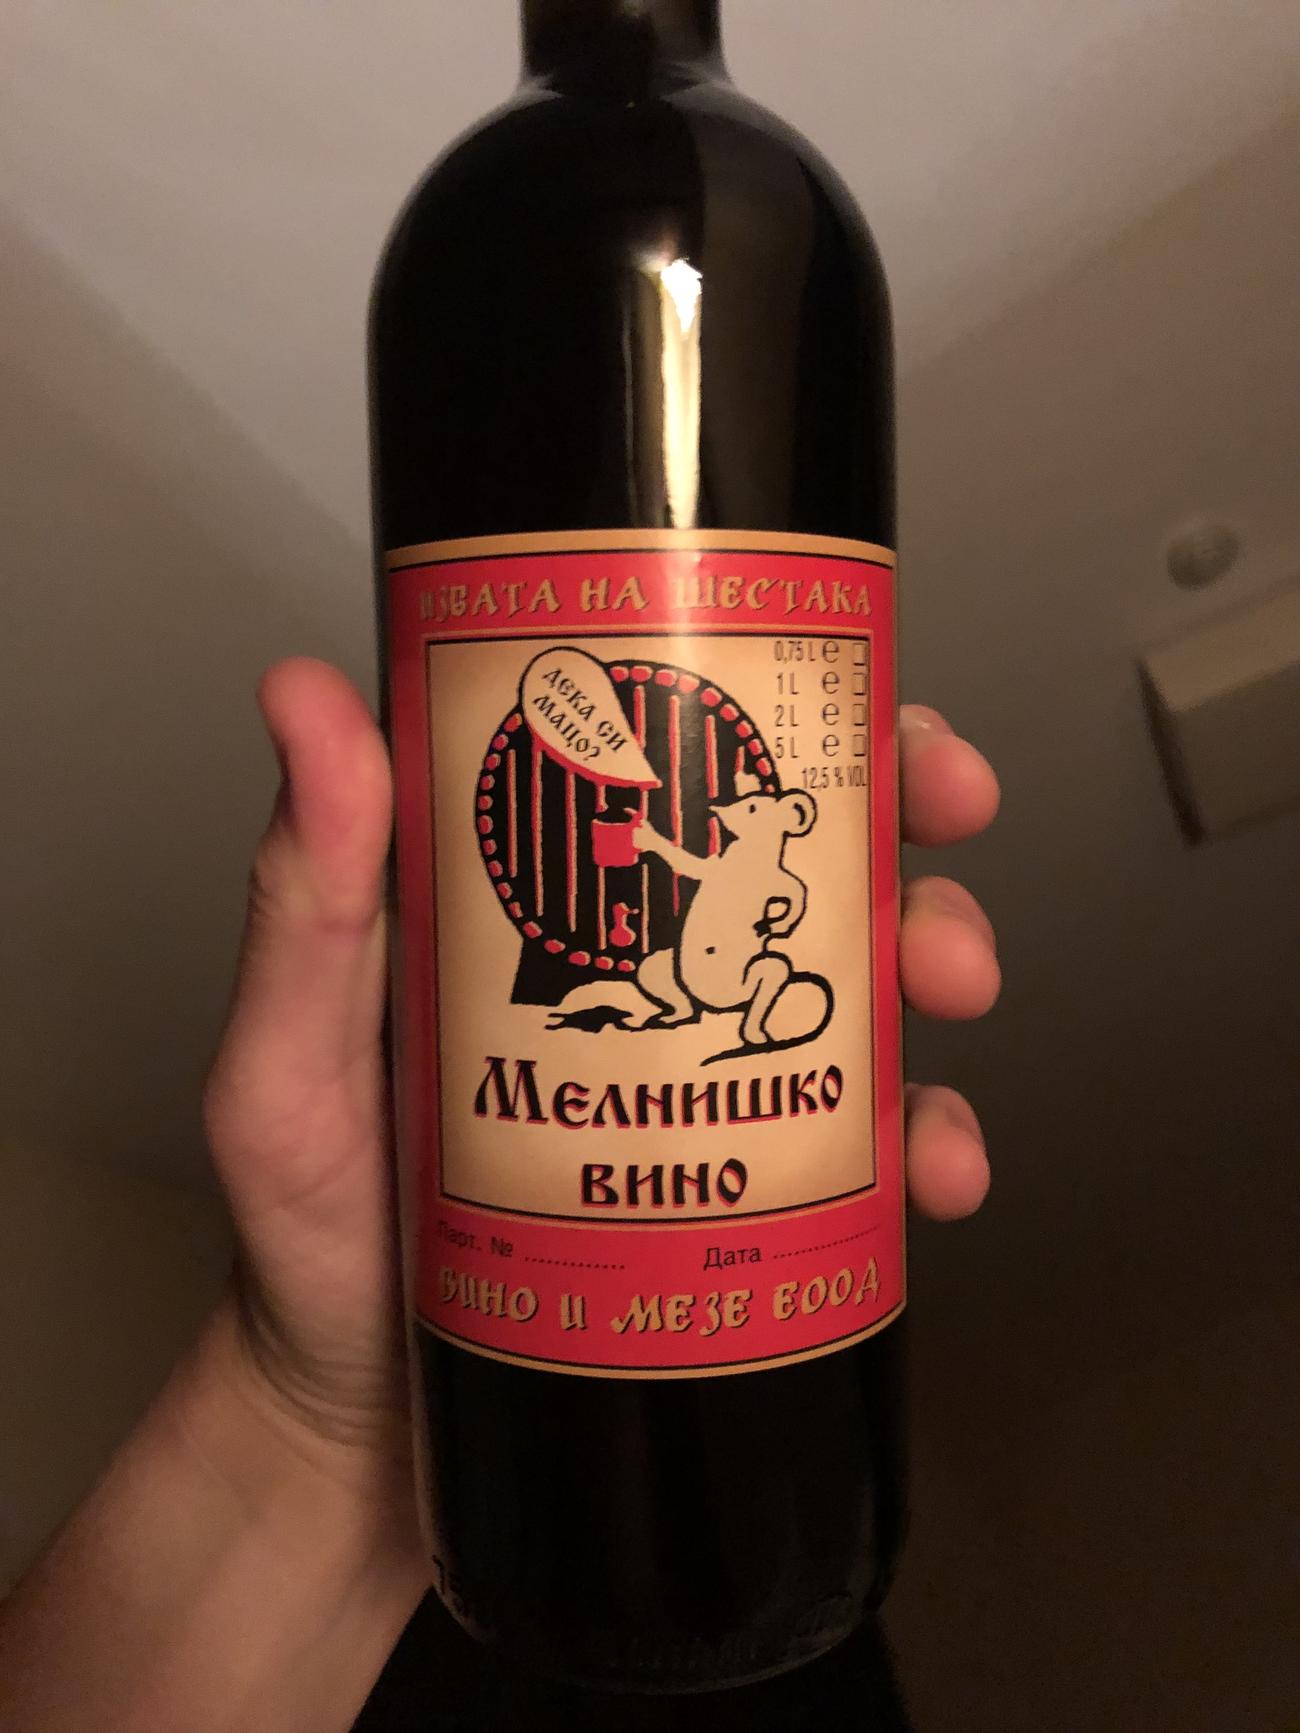 bulgaria wine